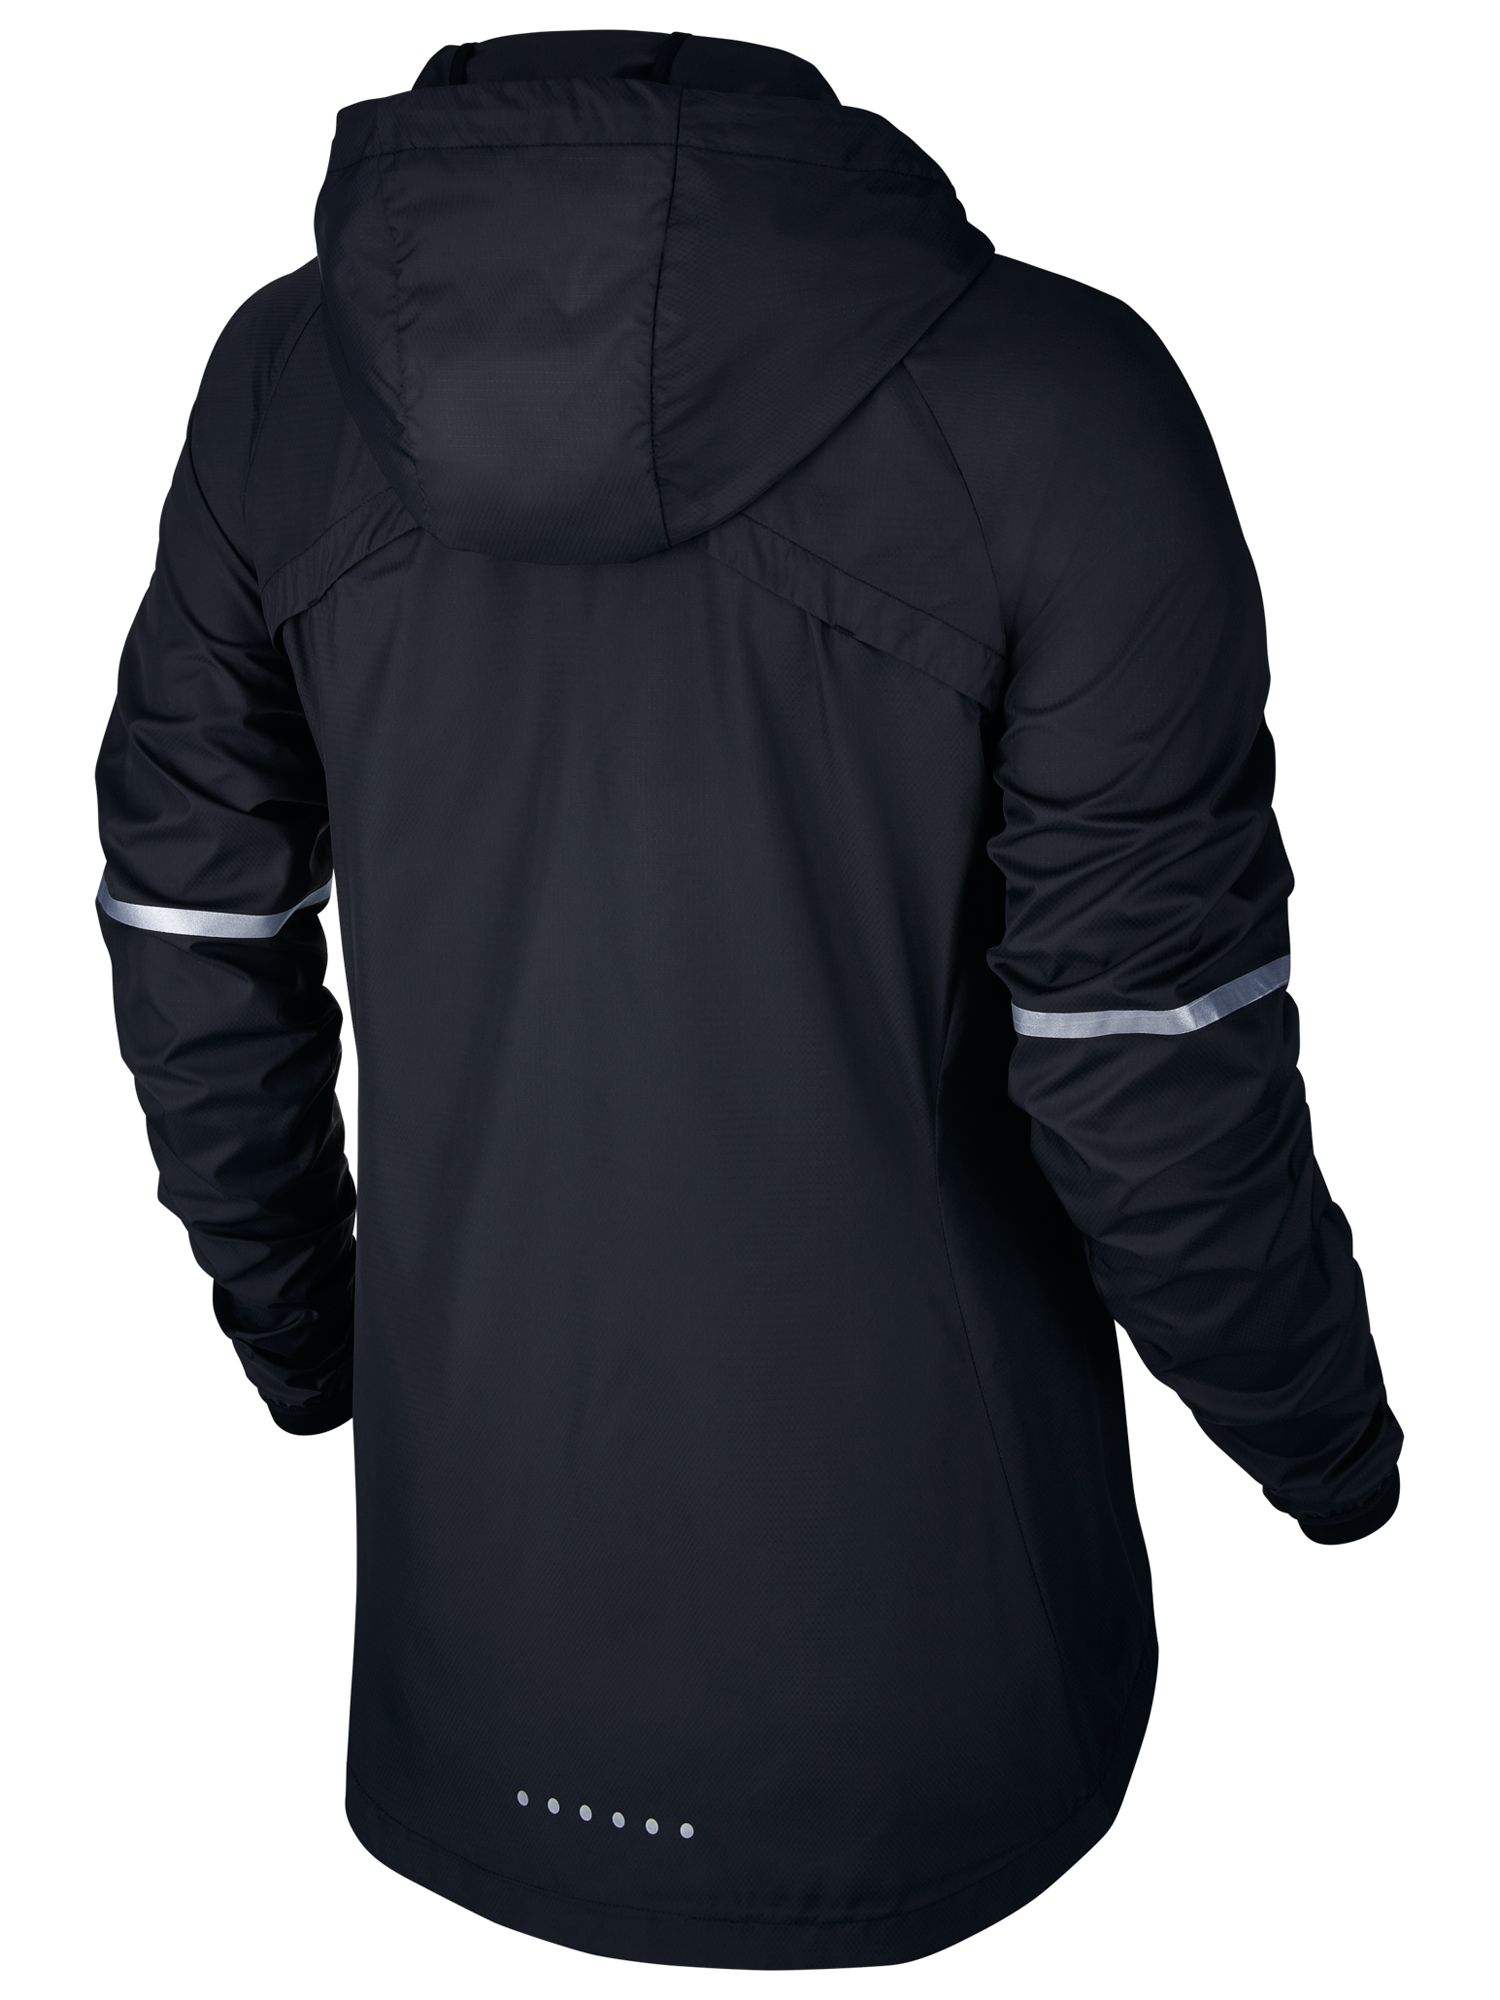 nike women's black jacket with hood